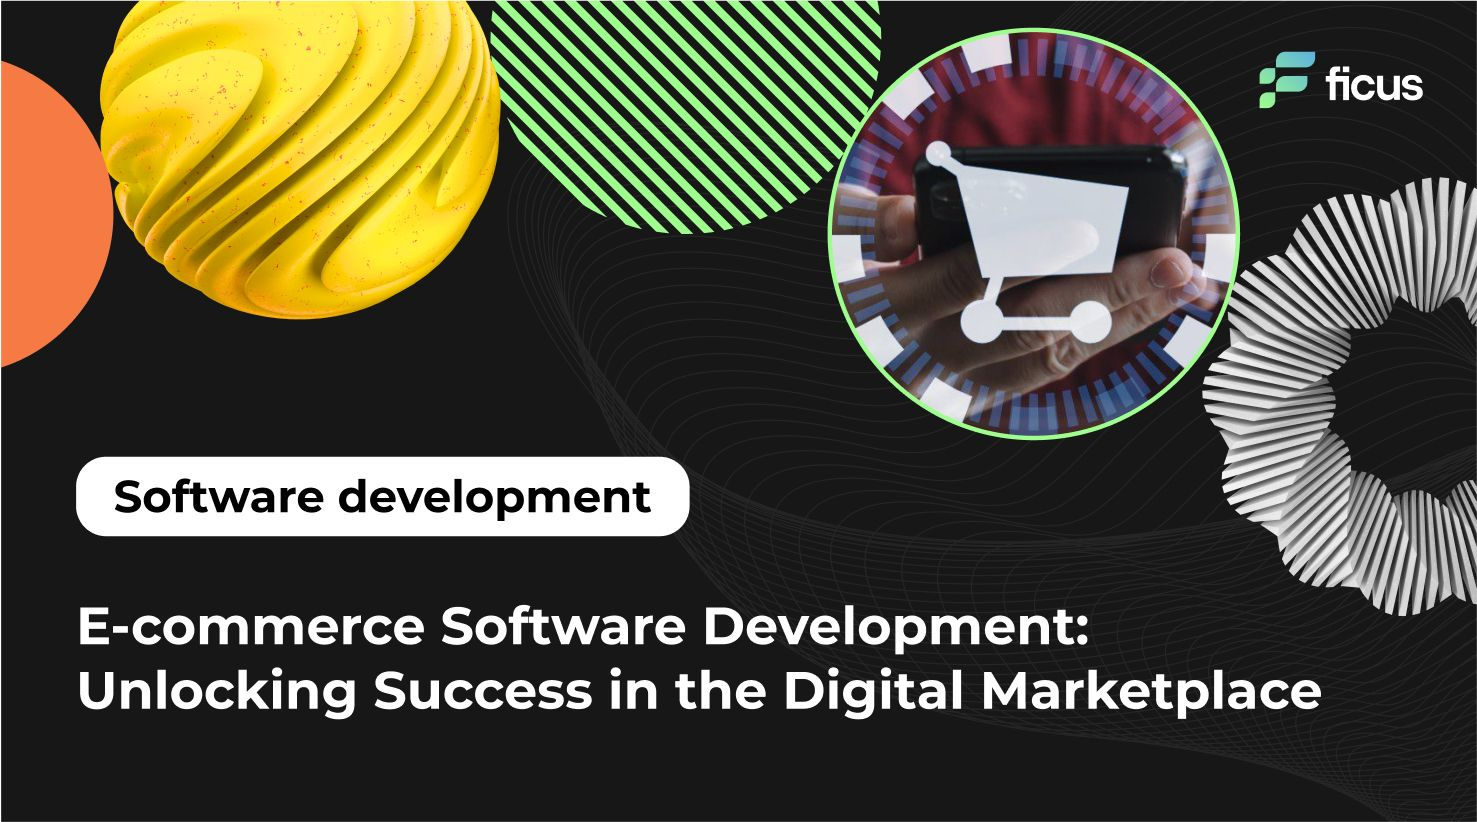 E-commerce Software Development: Unlocking Success in the Digital Marketplace